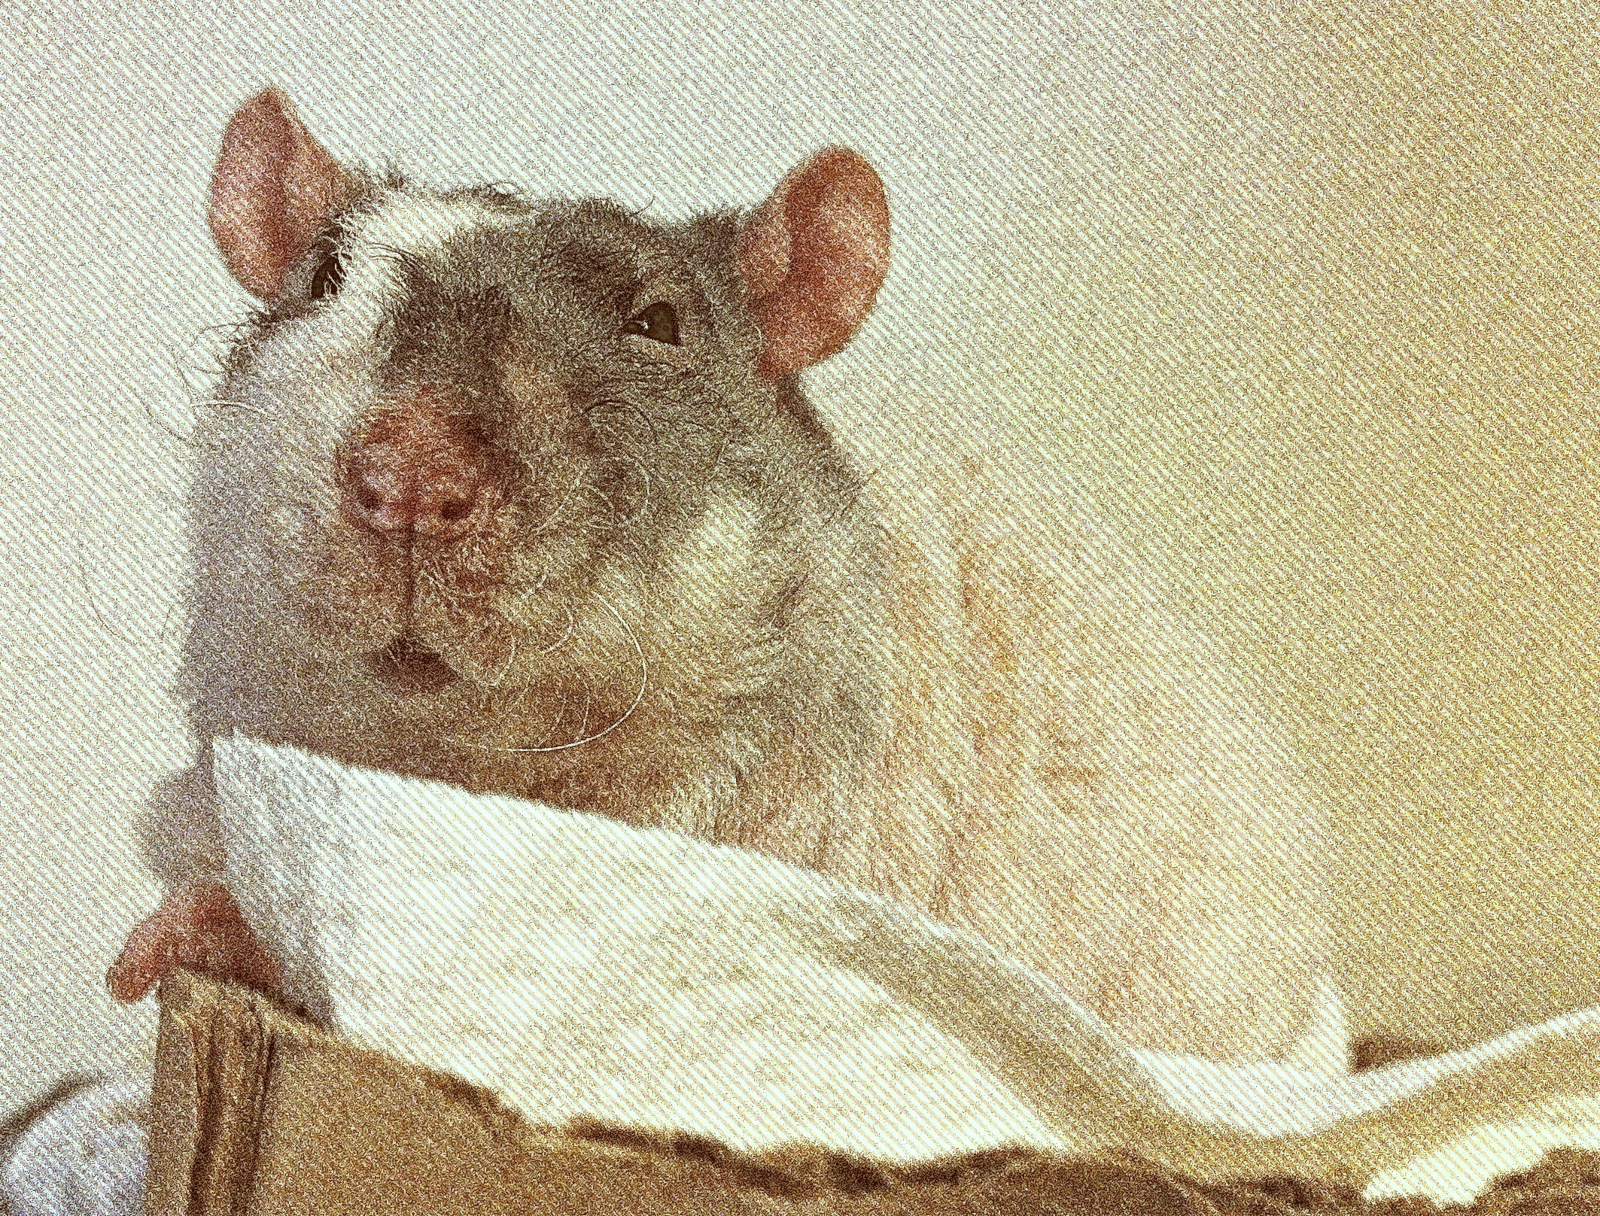 pet rat litter training